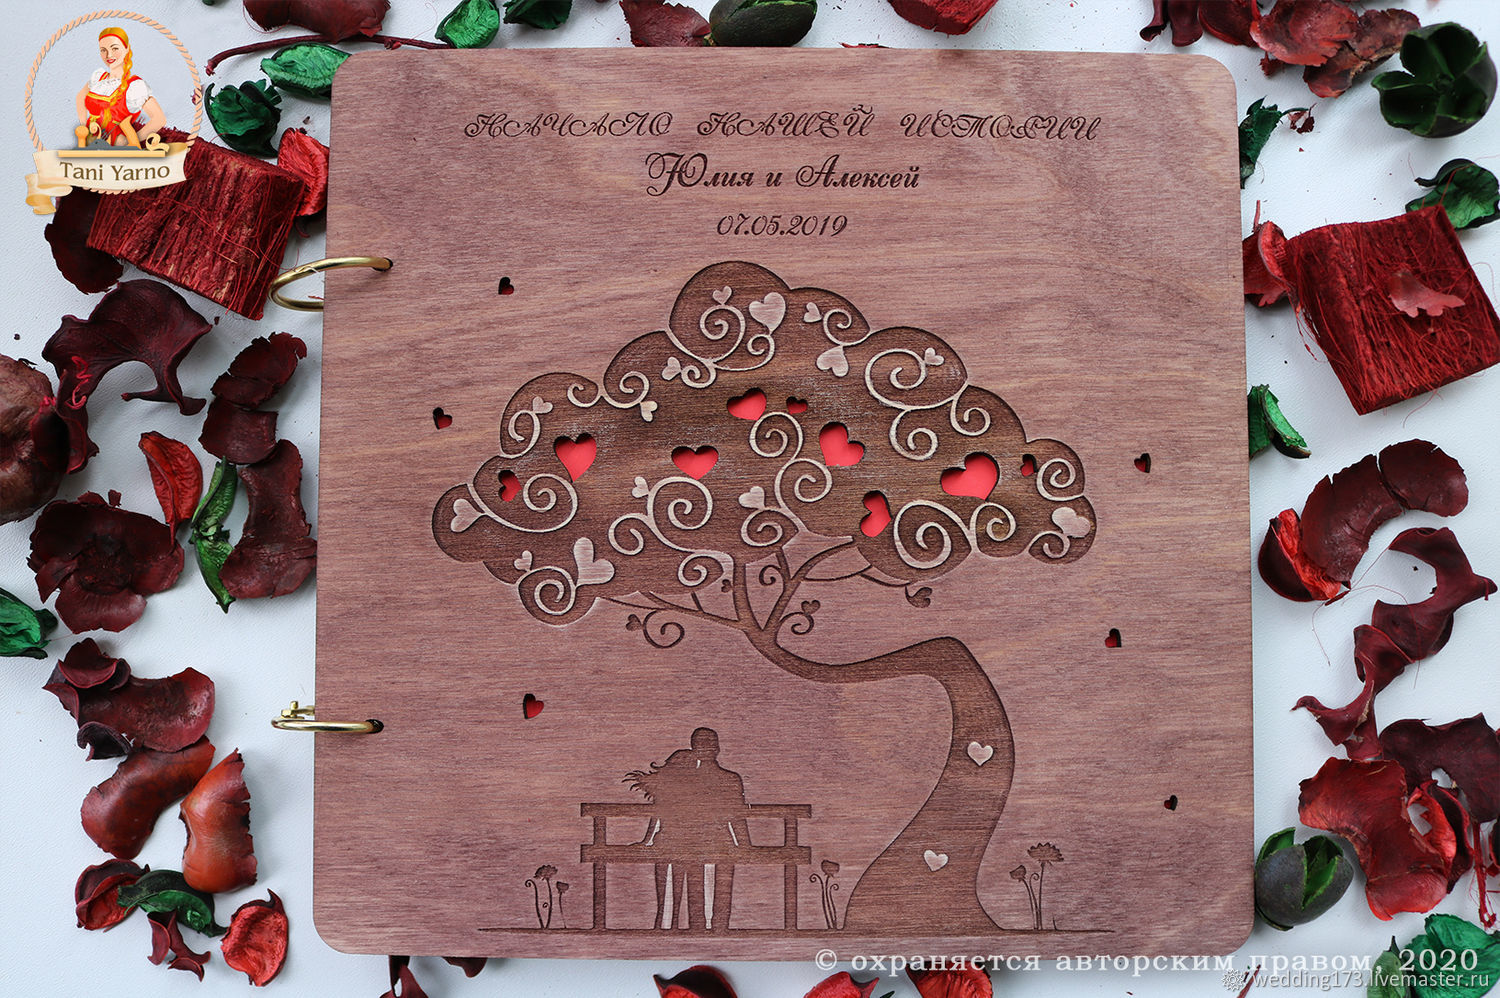 Wooden wedding book for wishes, Books, Dimitrovgrad,  Фото №1